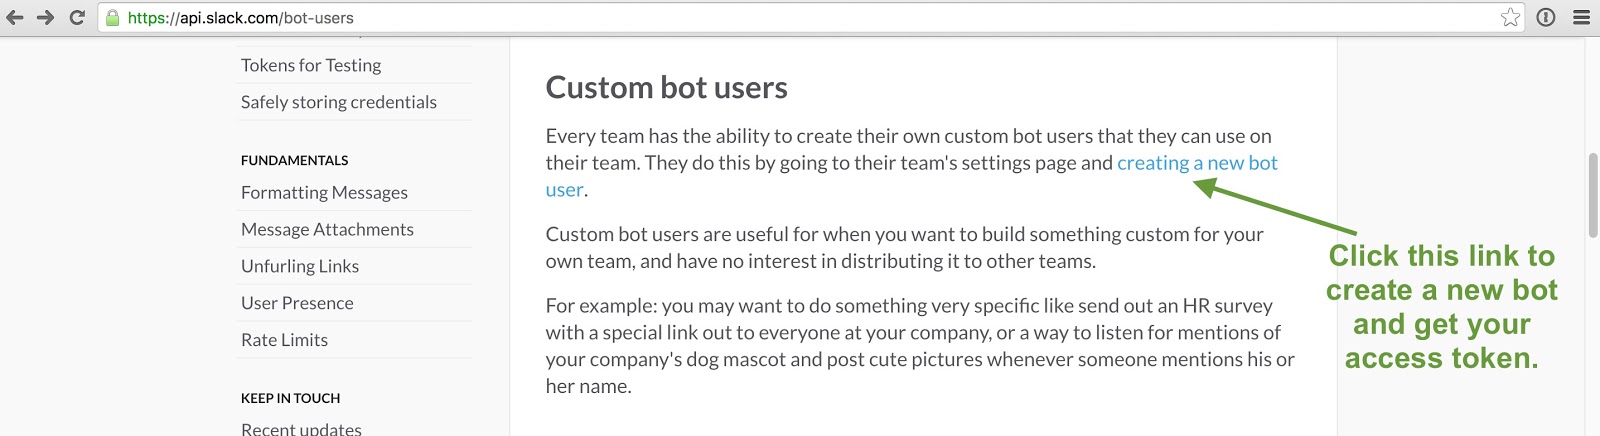 custom-bot-users.jpg